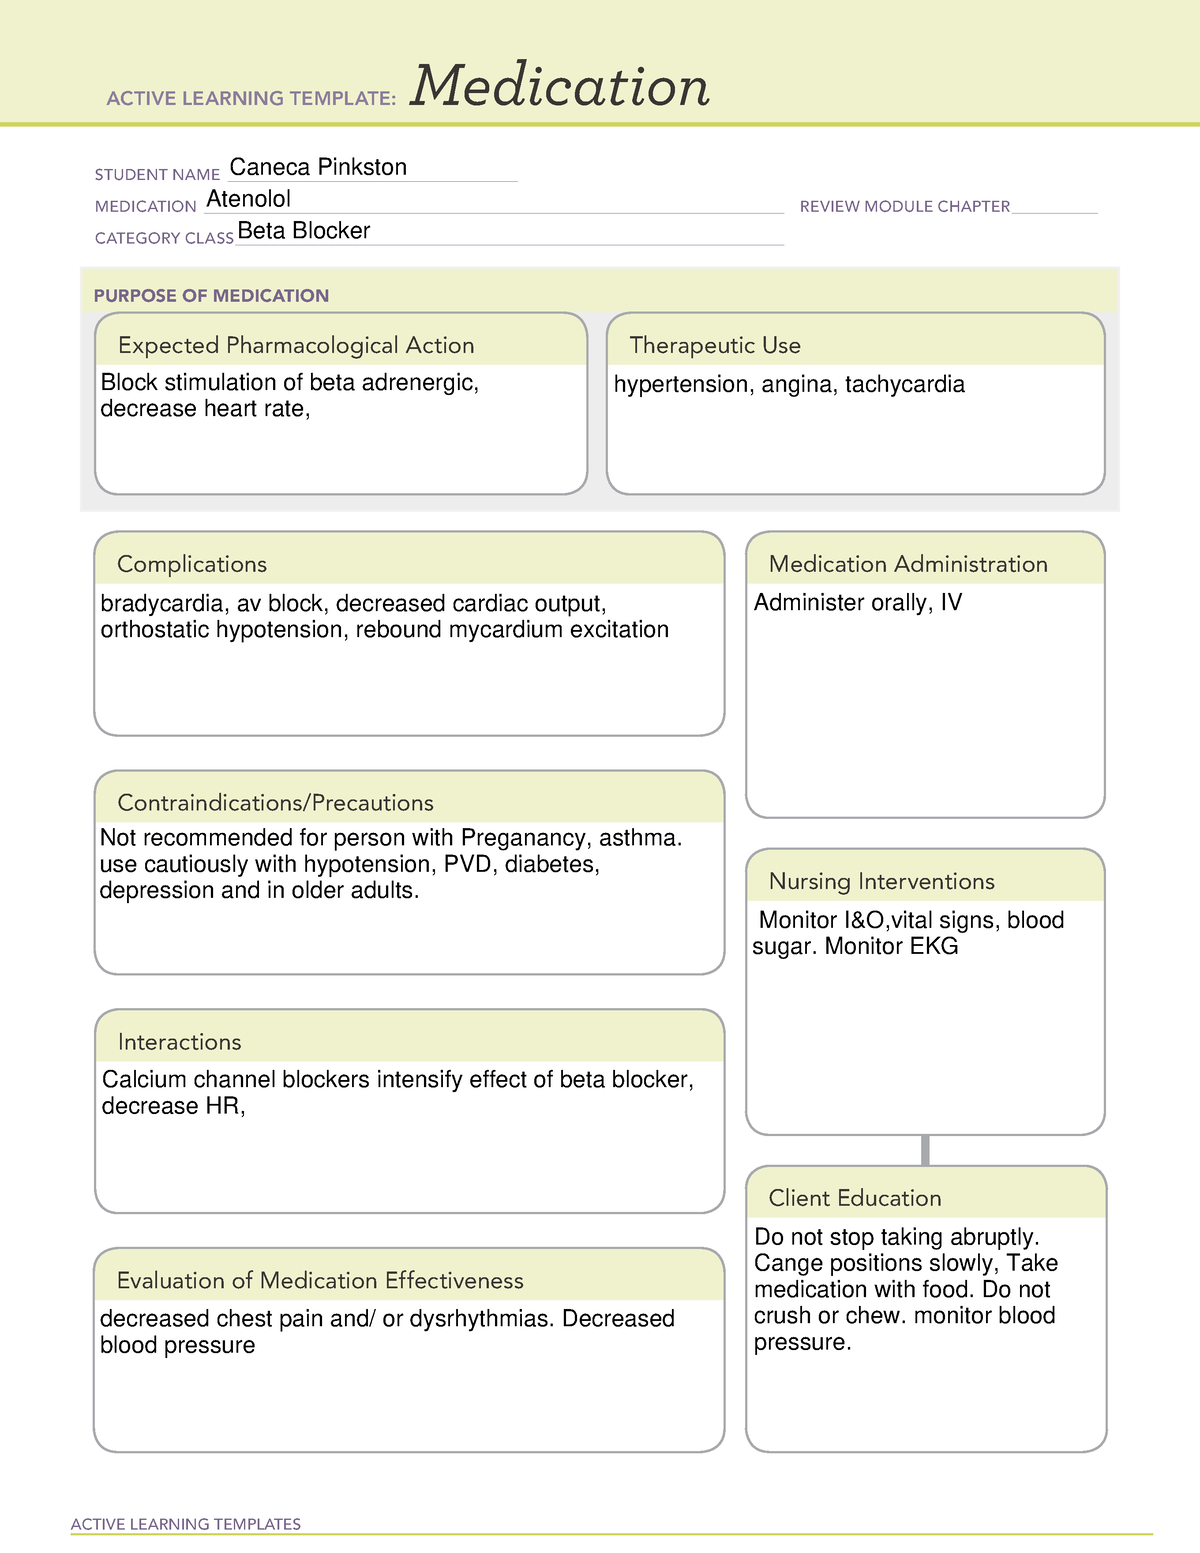 atenolol-ati-medication-template-active-learning-templates